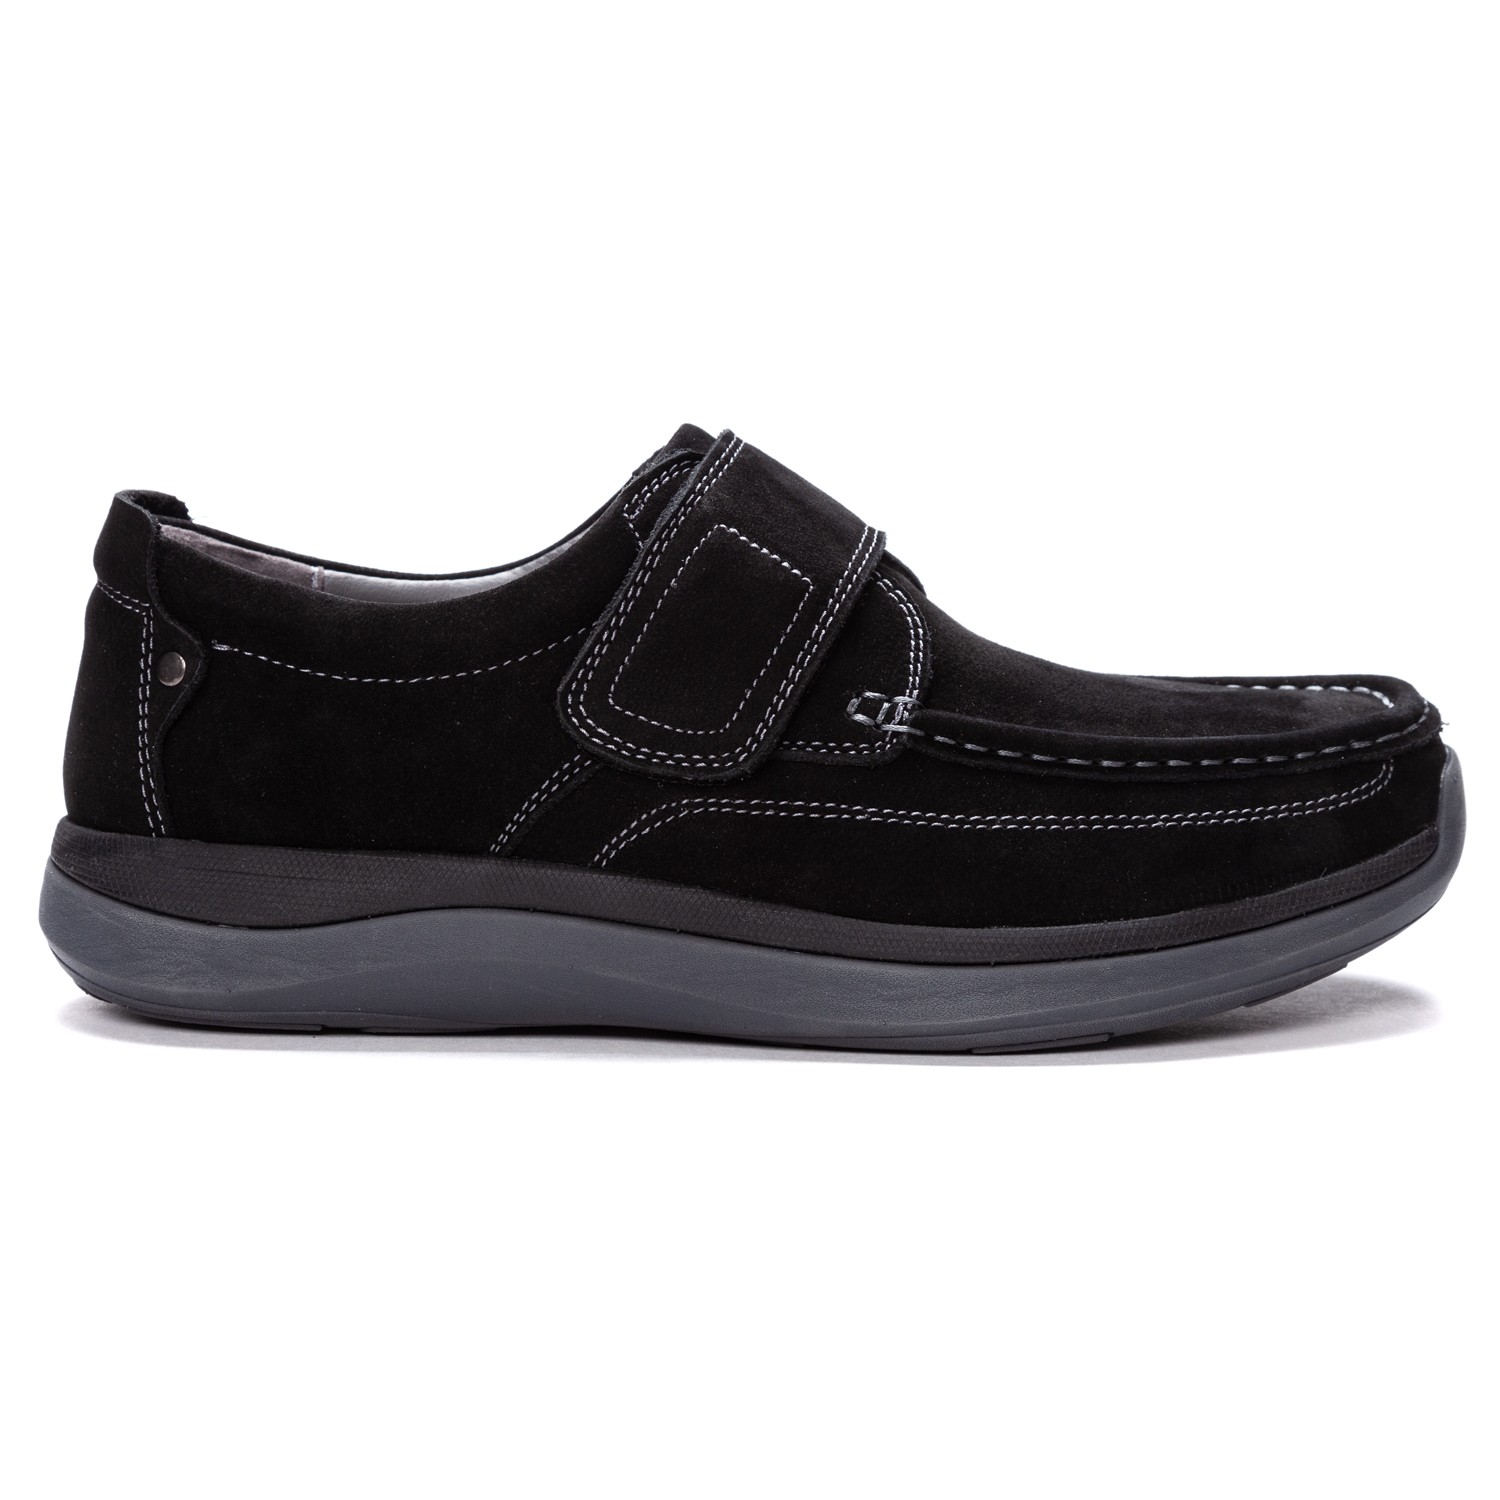 Propet Men's Porter Loafer Casual Shoes - image 2 of 6